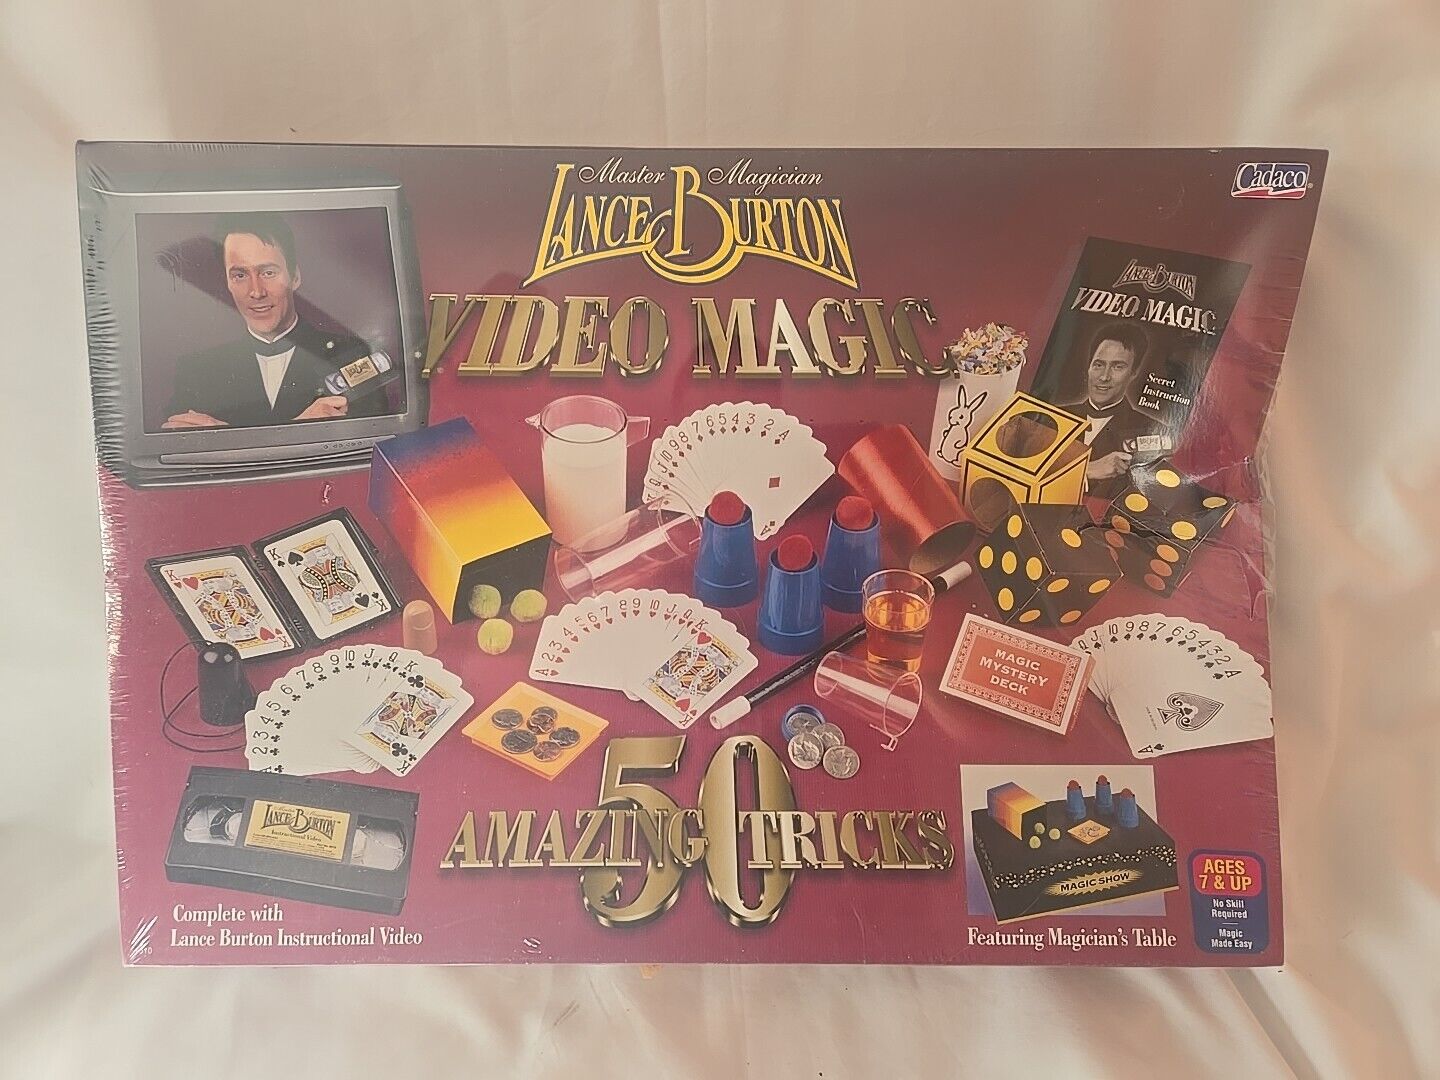 Lance Burton Master Magician Video Magic 50 Amazing Tricks Cadaco 1999 Sealed